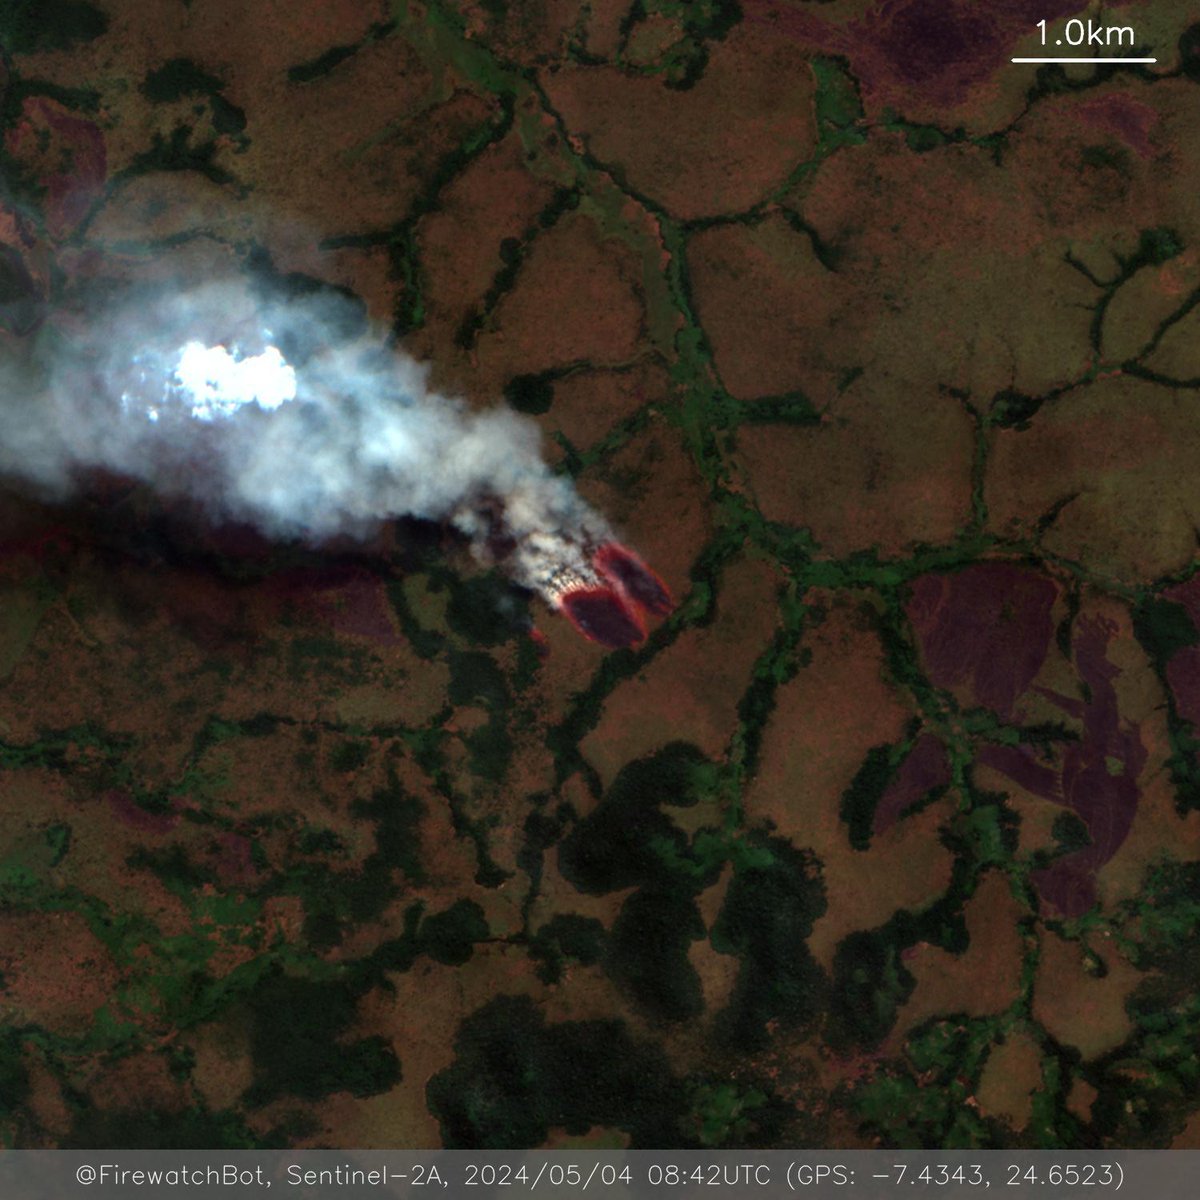 Fire detected from #Sentinel2

🗺 Place: Kamina, Haut-Lomami, #DemocraticRepublicoftheCongo
🕛 Date: 2024/05/04 08:42UTC

View location: maps.google.com/?q=-7.43434965… (-7.4343, 24.6523)